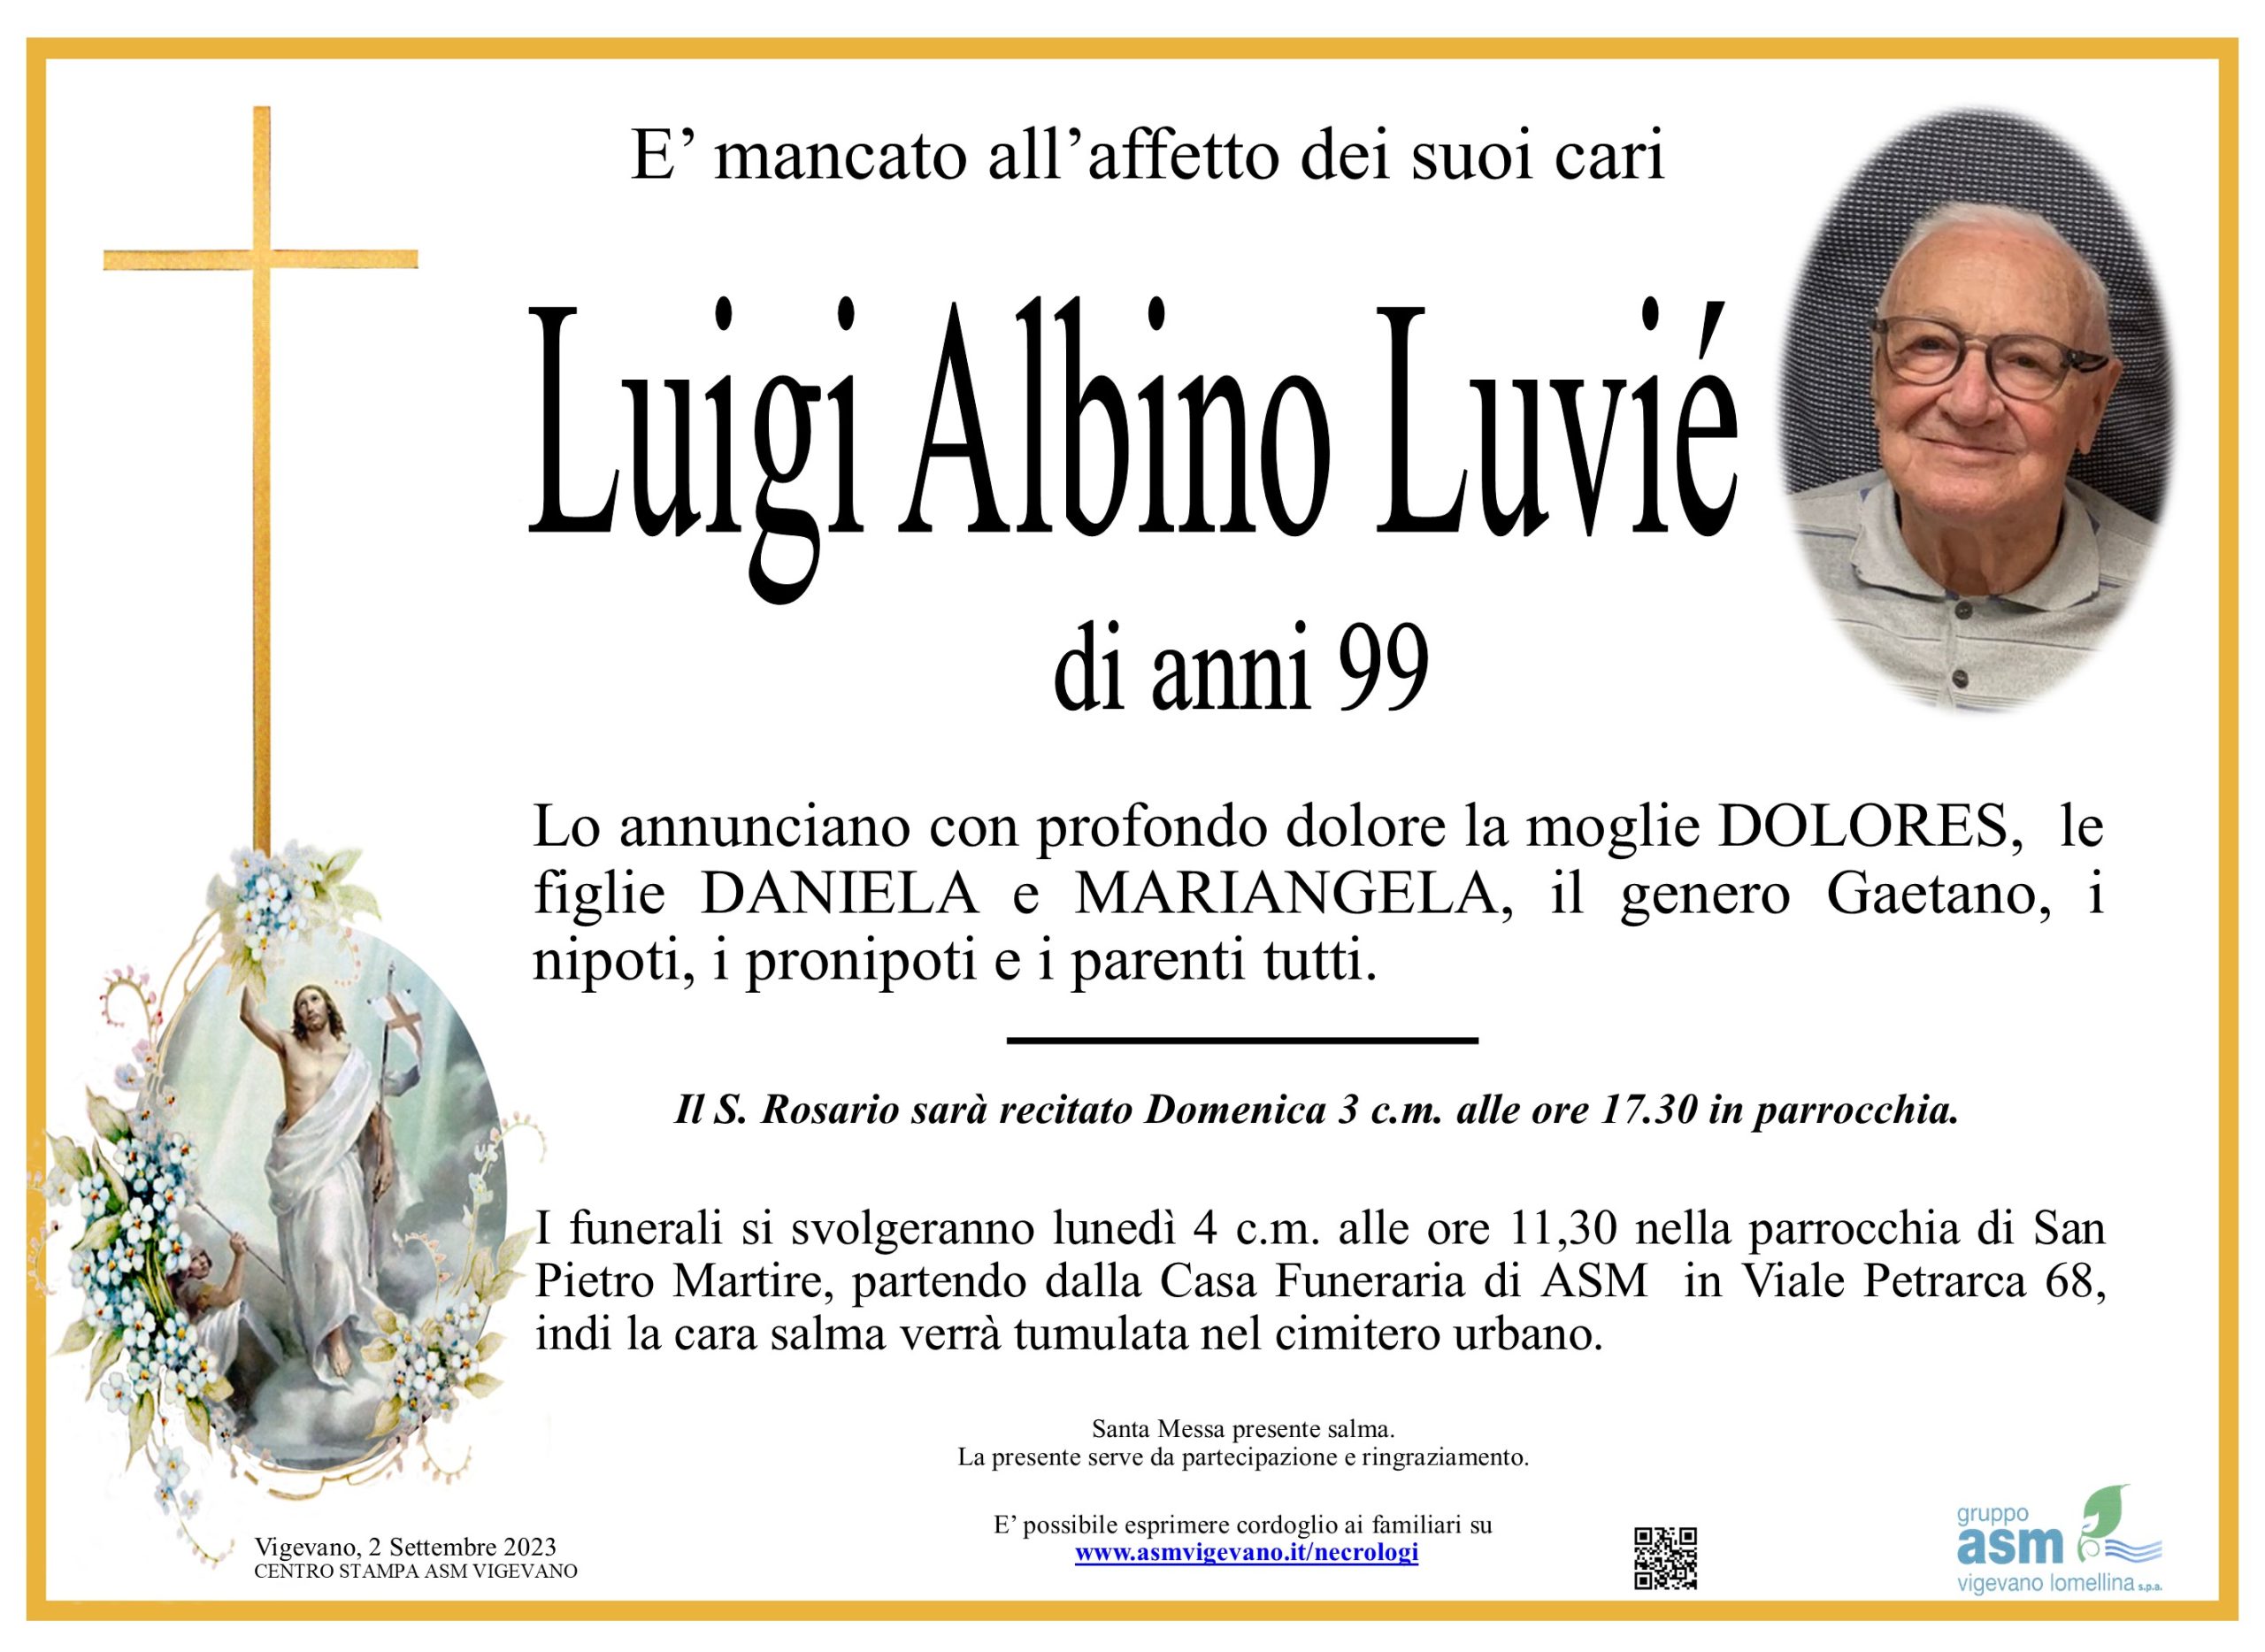 Luigi Albino Luviè